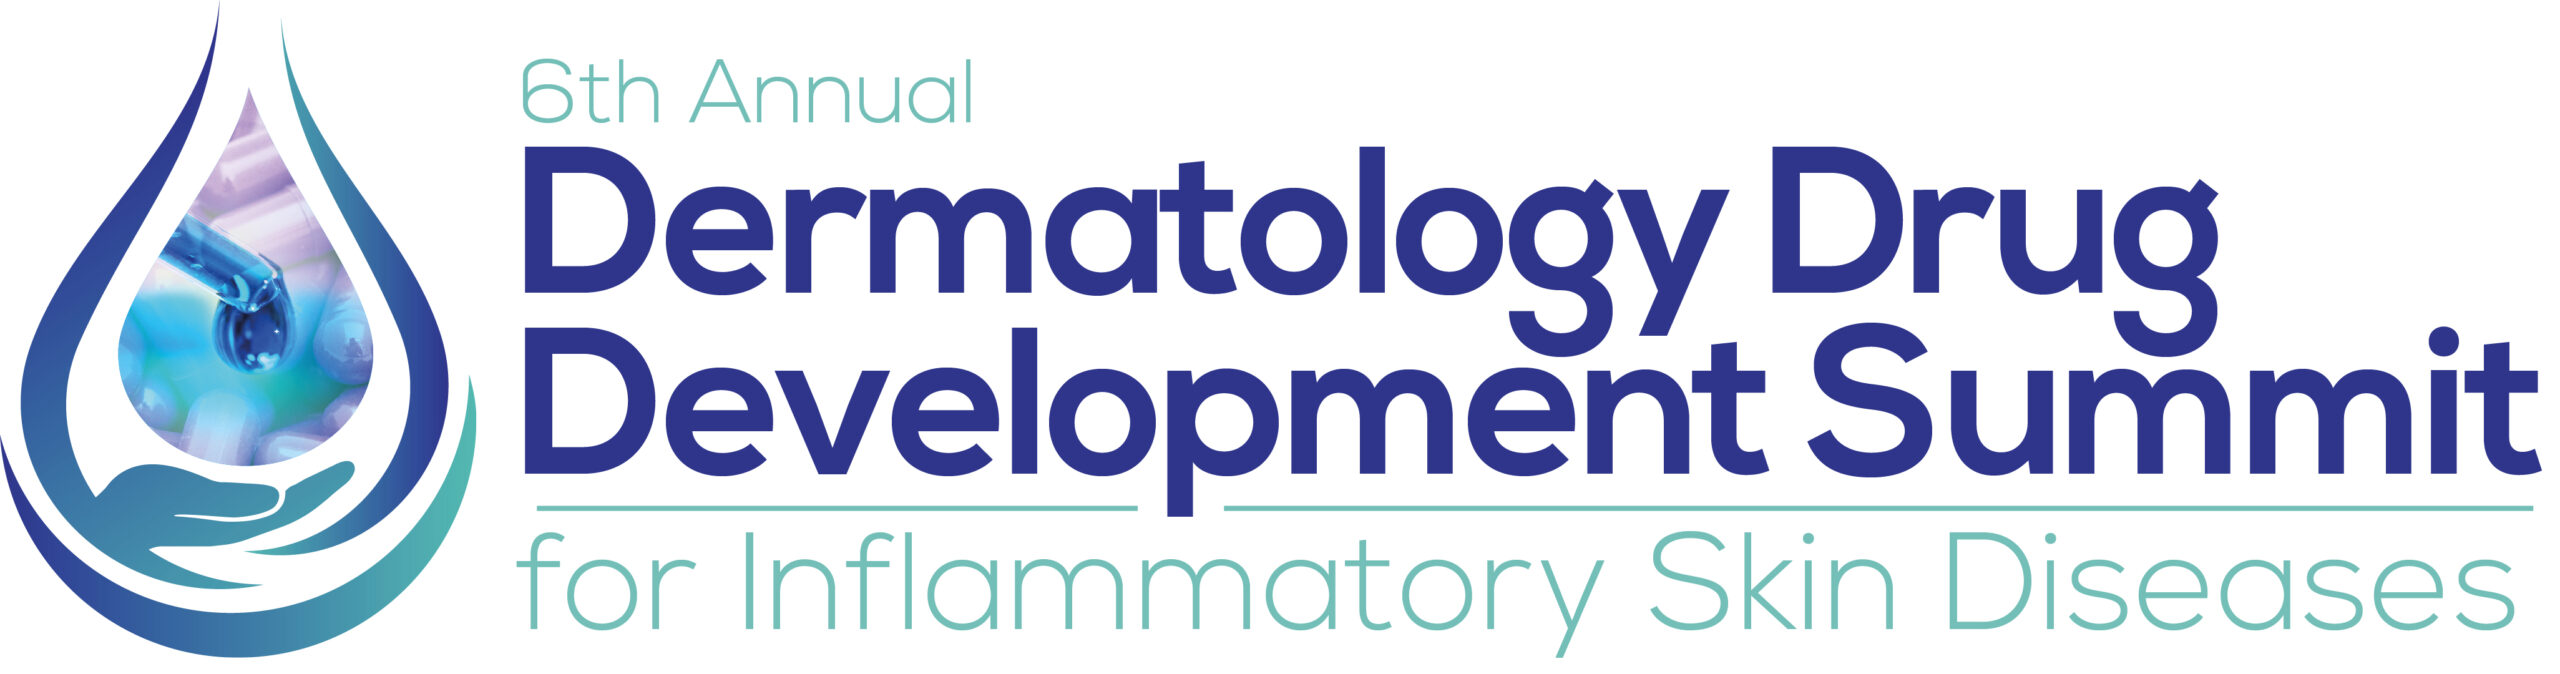 HW220504 6th Dermatology Drug Development Summit logo